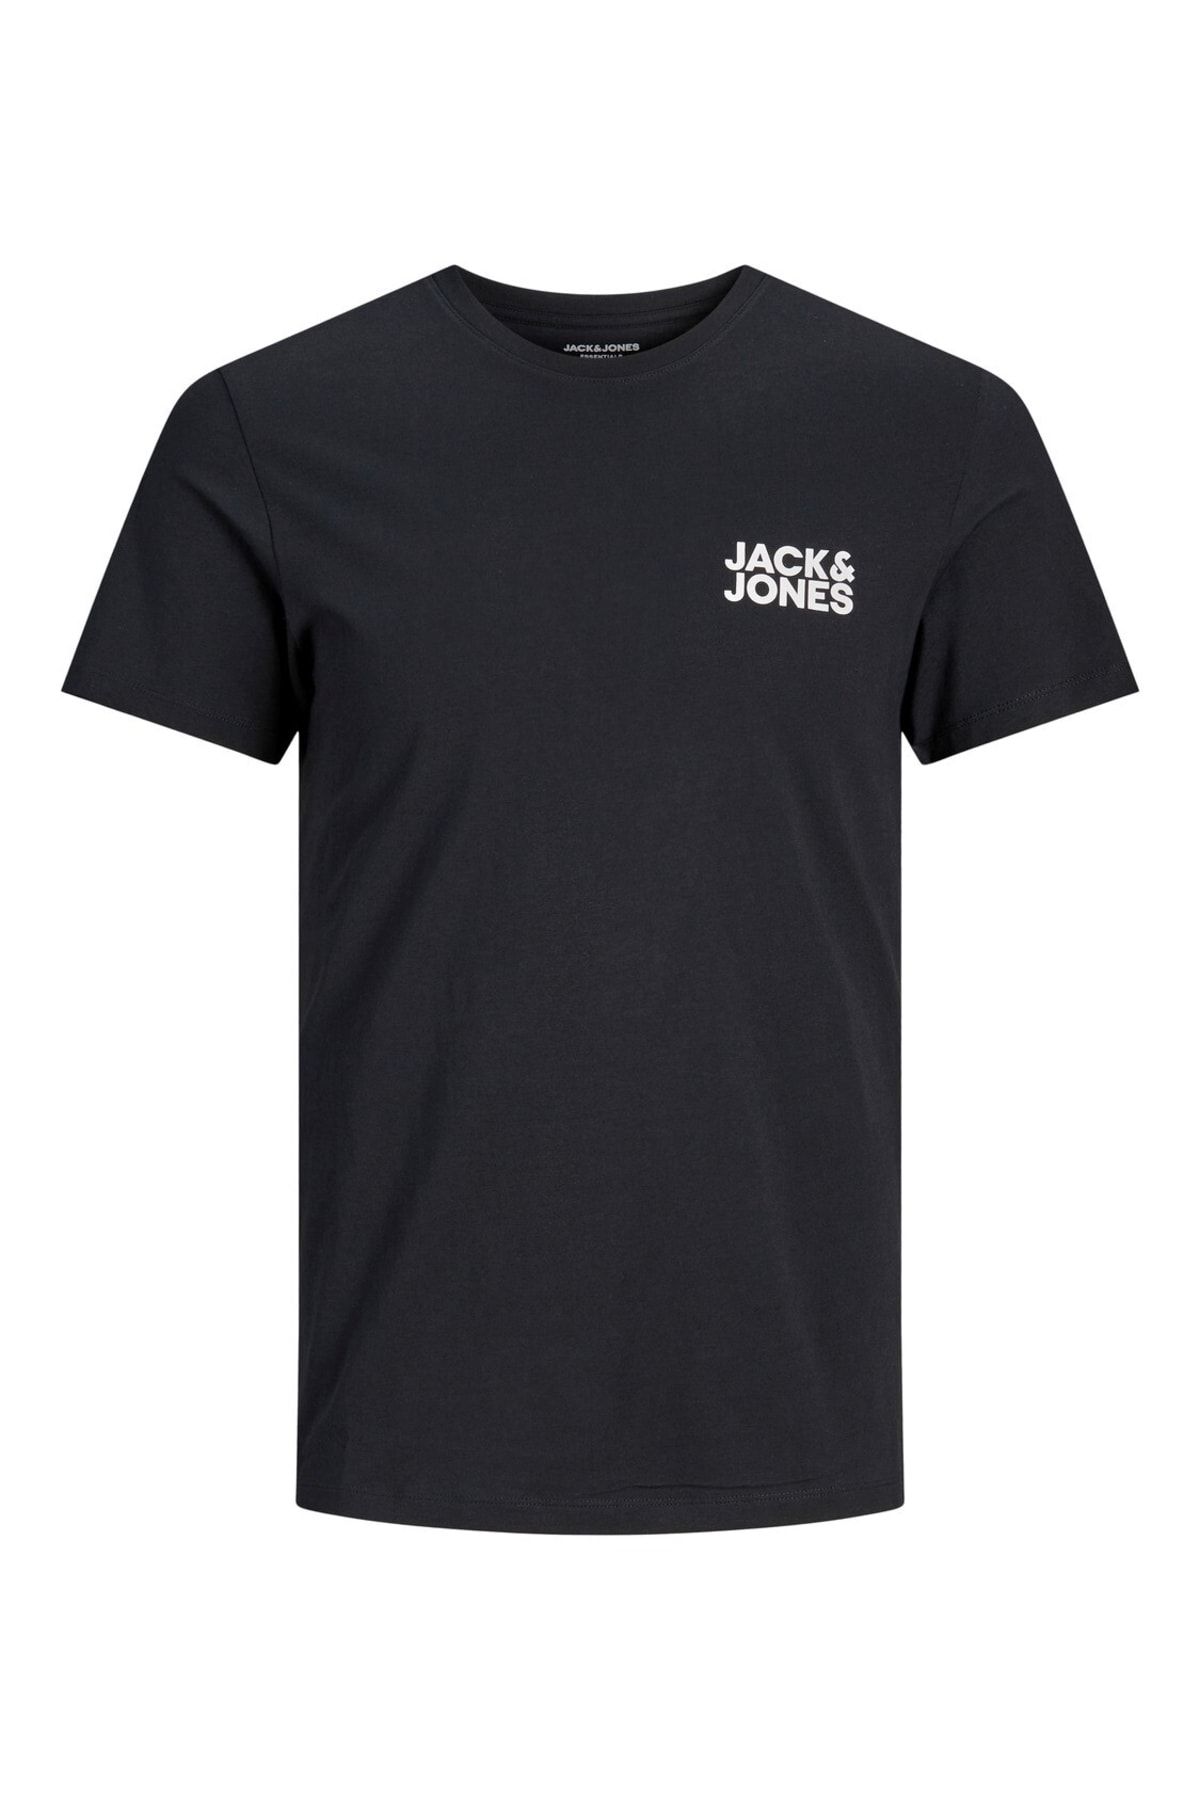 Jack & Jones Erkek Siyah Sol Göğüs Küçük Yazılı Tshirt